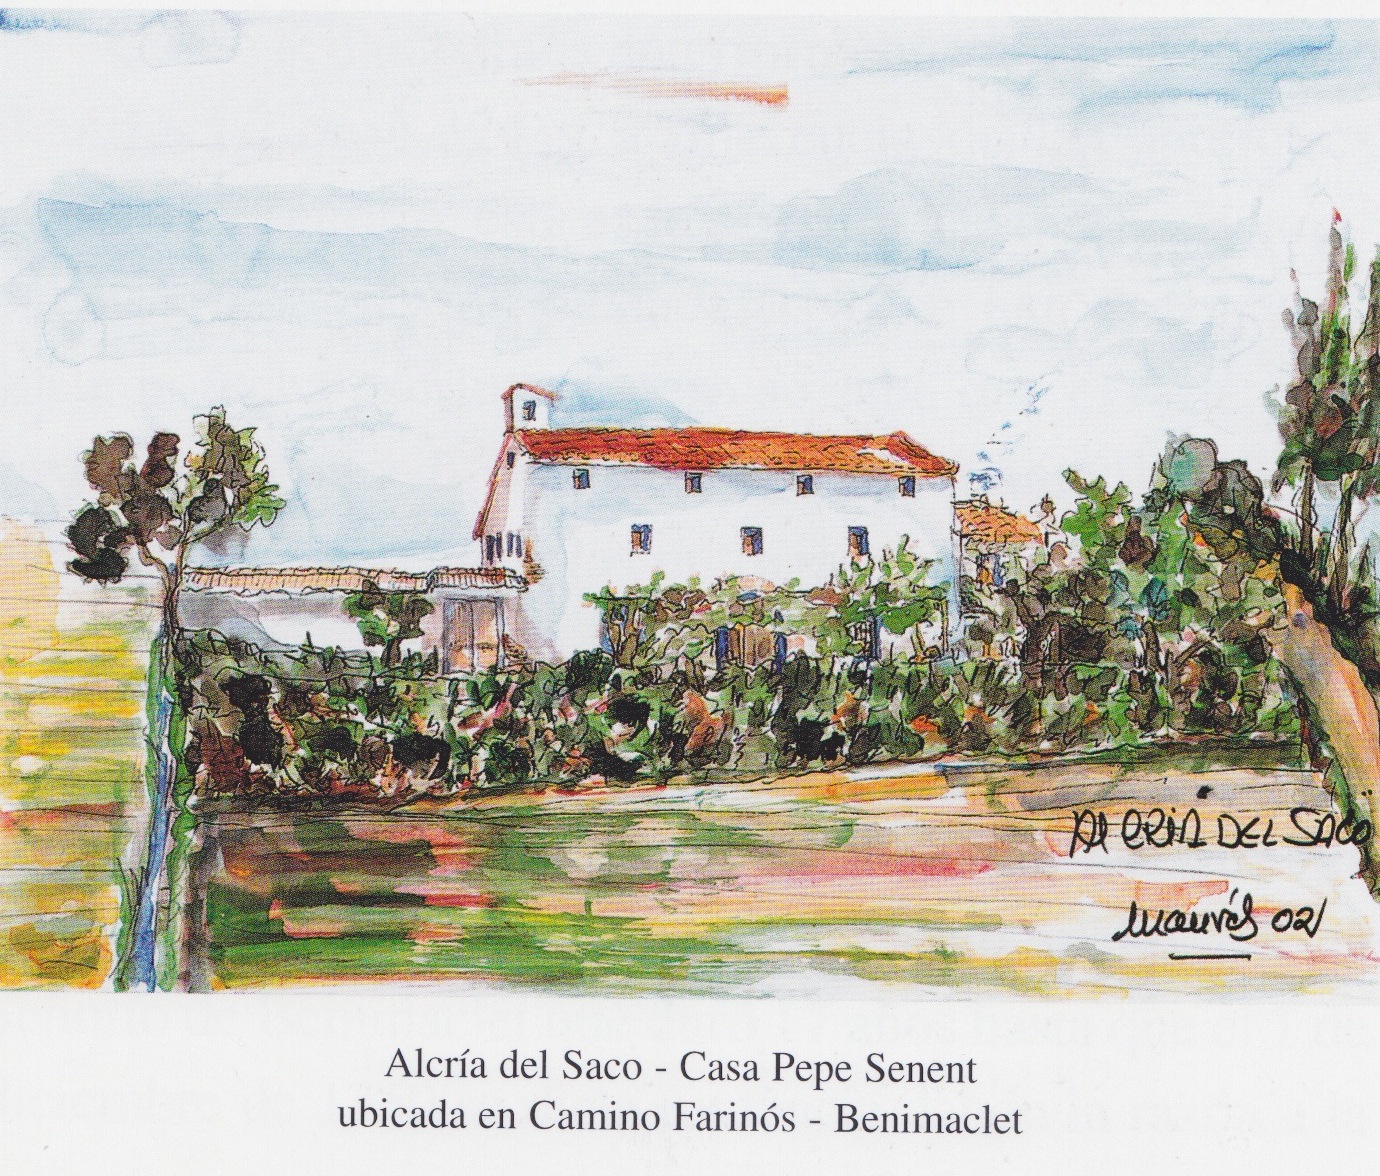 The Rascanya- Antonio Cañuelo High School – Benimaclet Conta